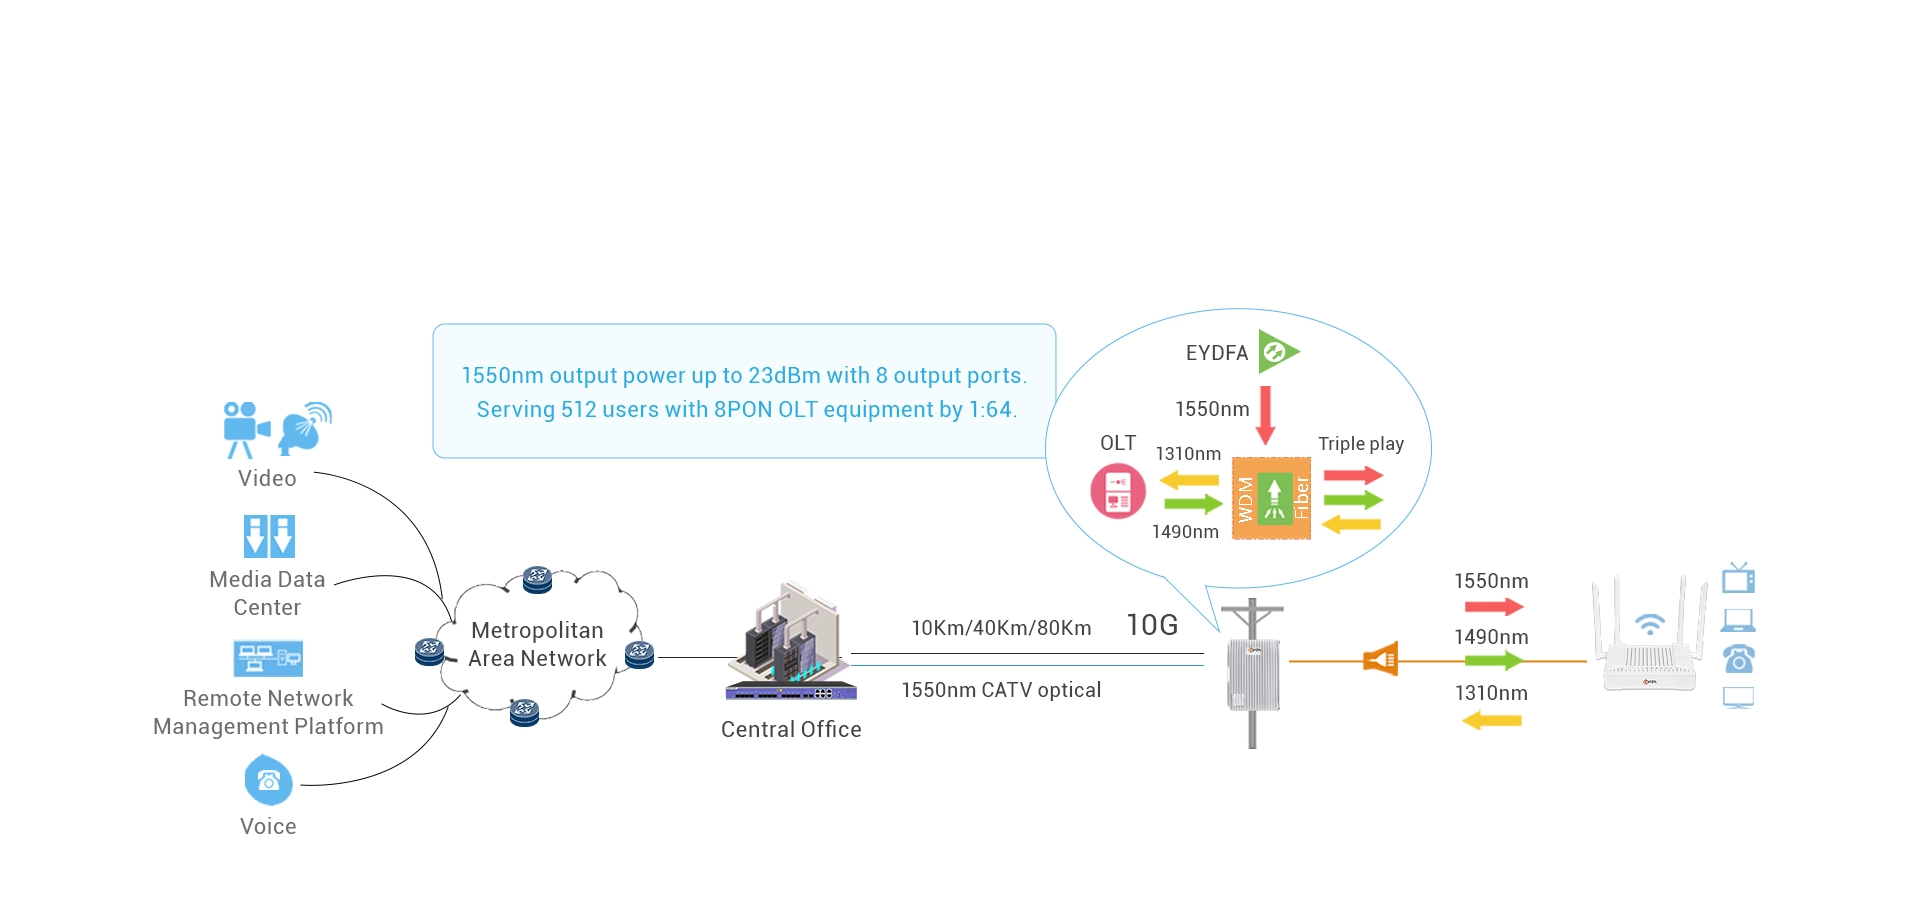 Integrated EYDFA for CATV MSO 1550nm RF Overlay Solution (Optional)